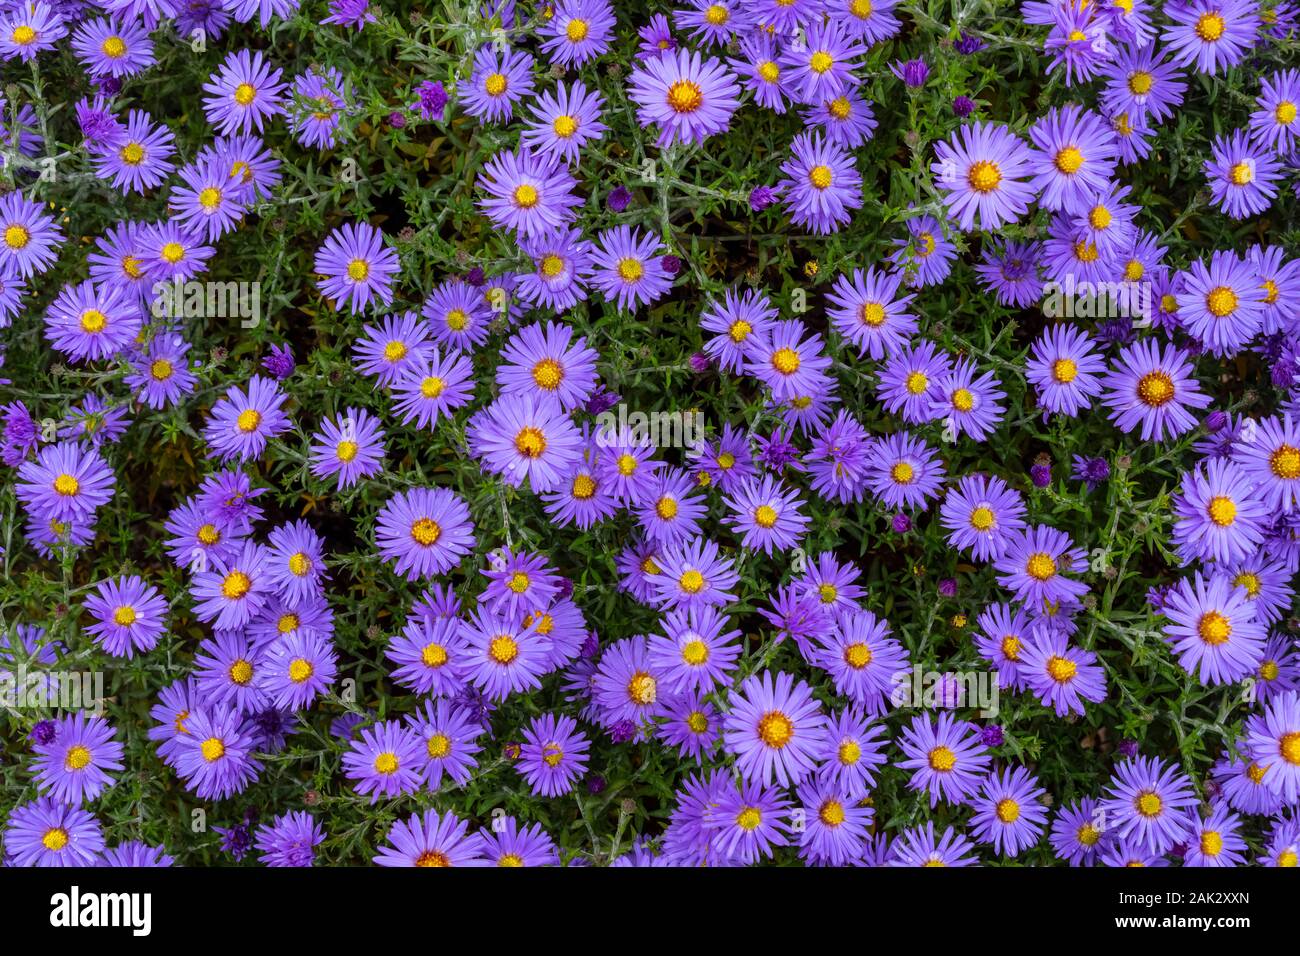 Lawn with flowers symphyotrichum novi-belgii as a background. Stock Photo